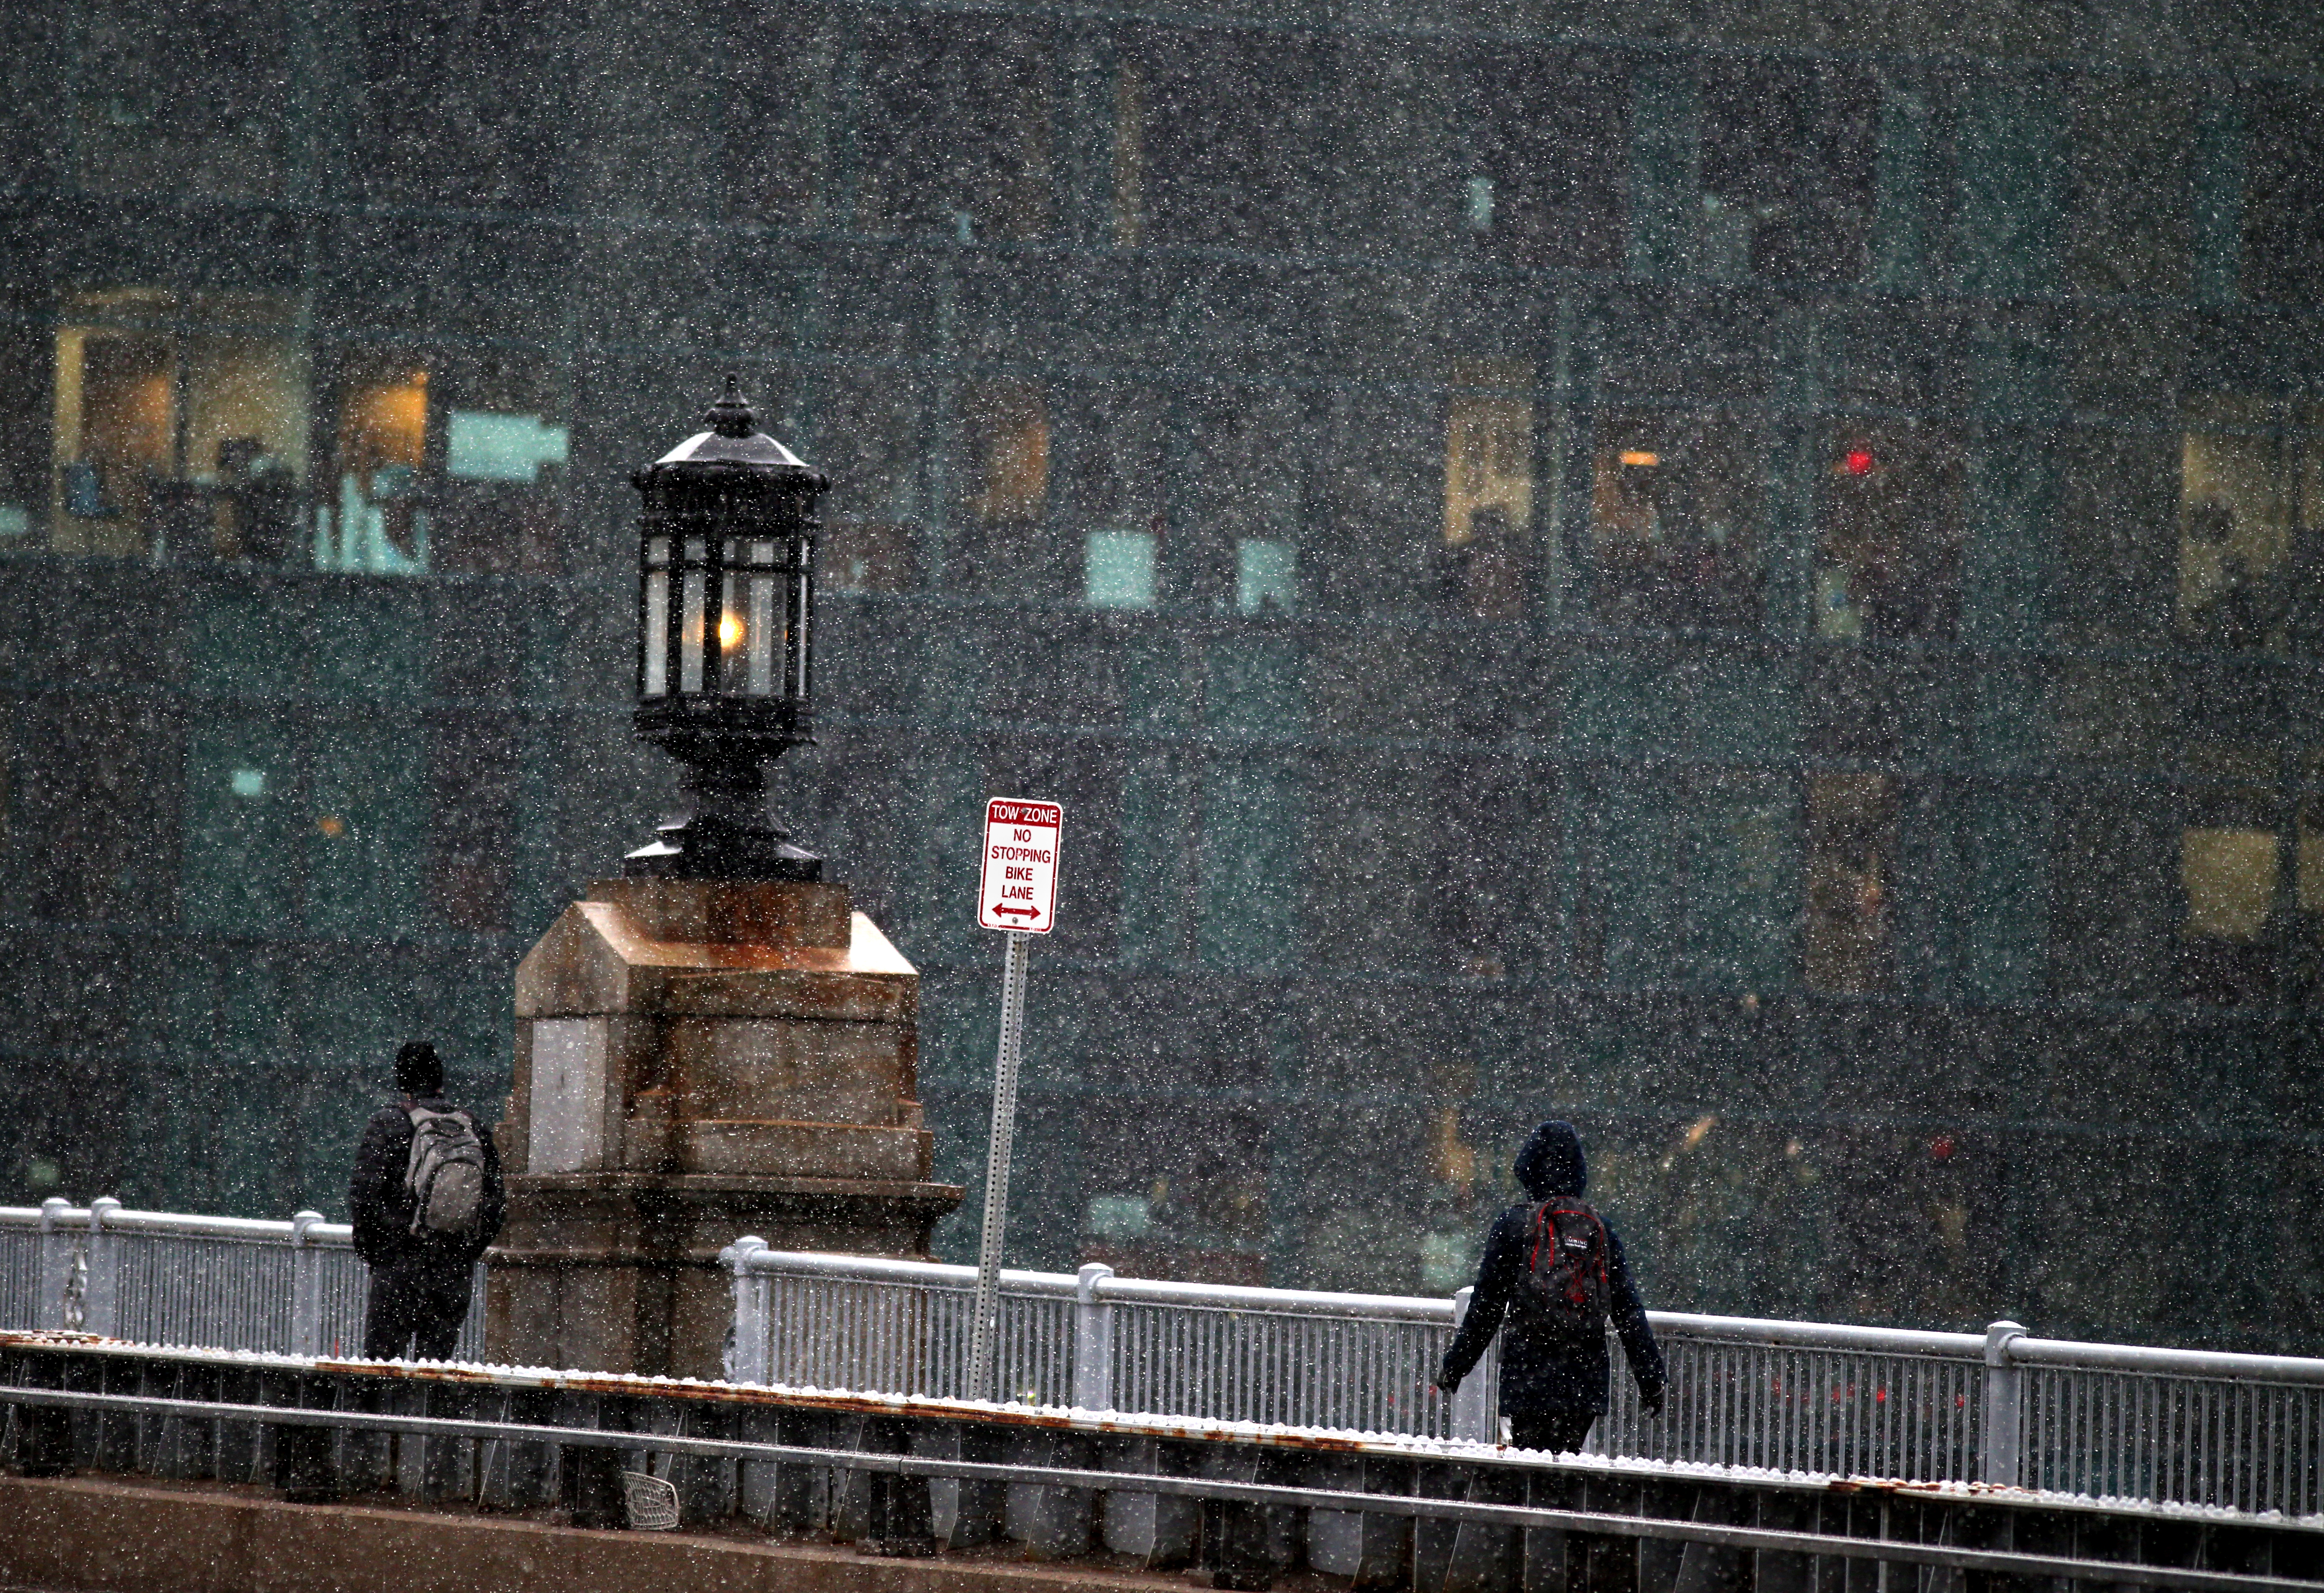 Winter storm slows commute, closes schools - The Boston Globe